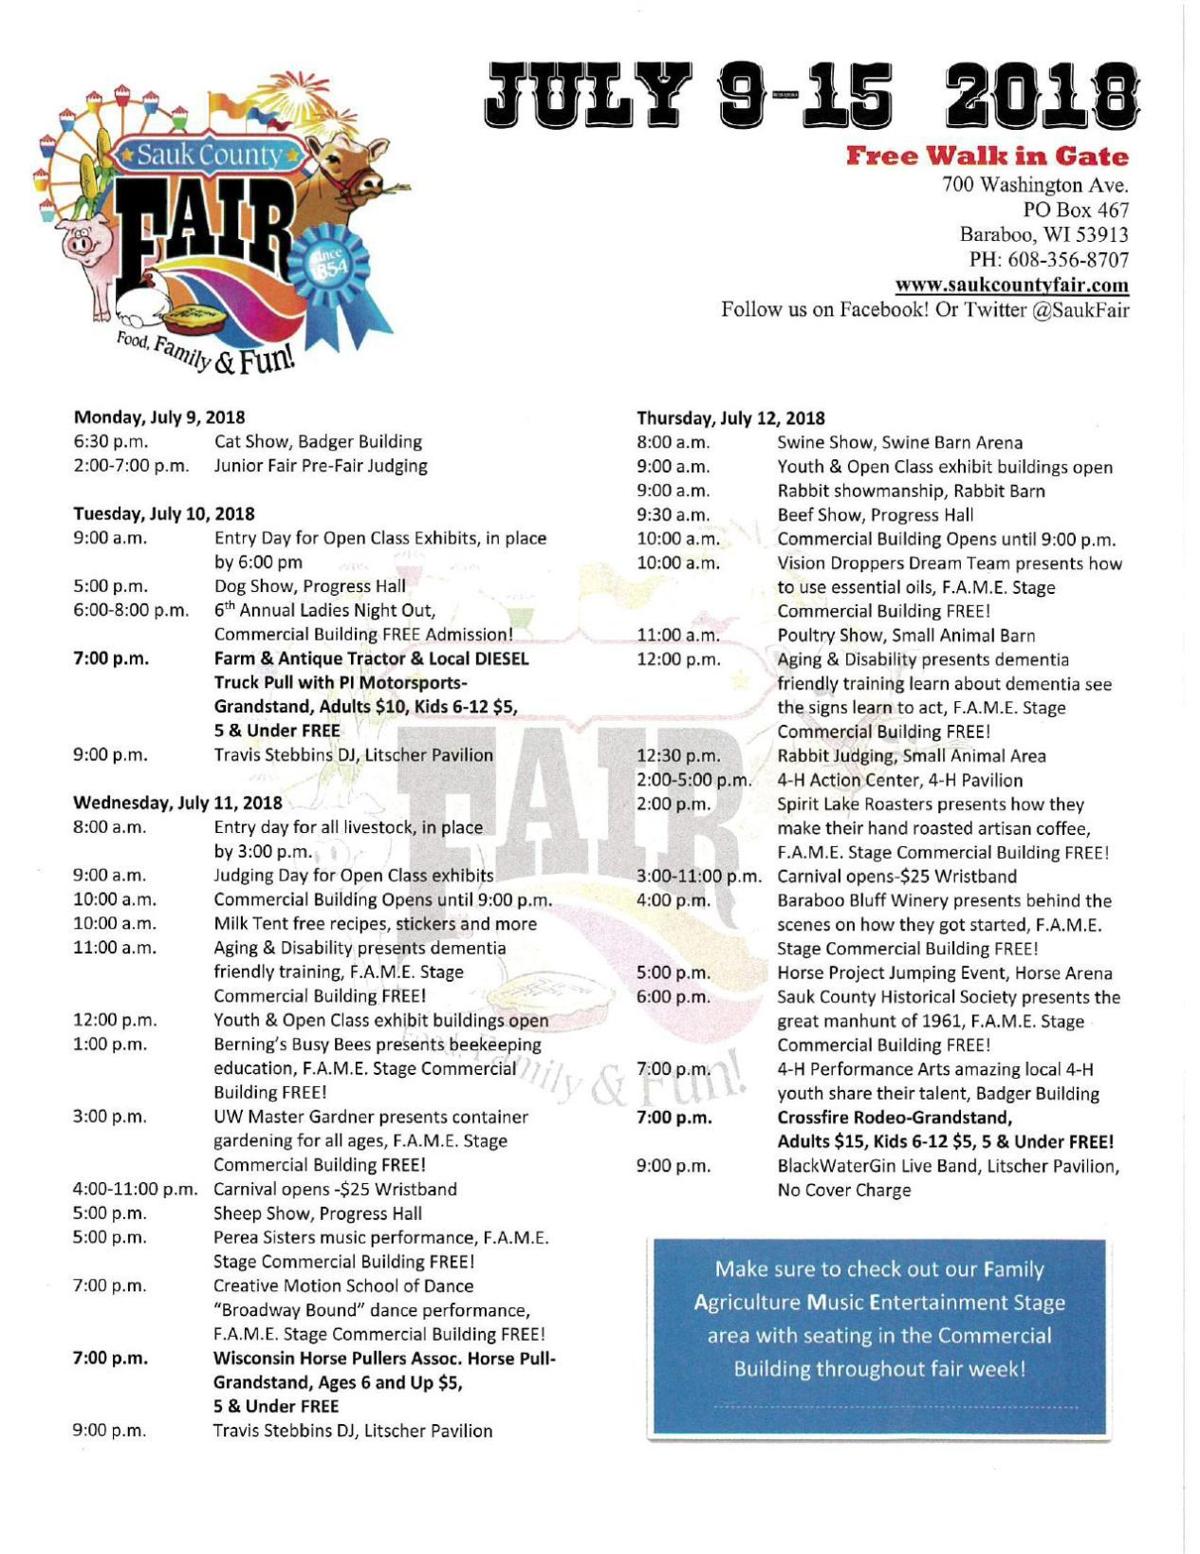 This weekend at the Sauk County Fair Regional news